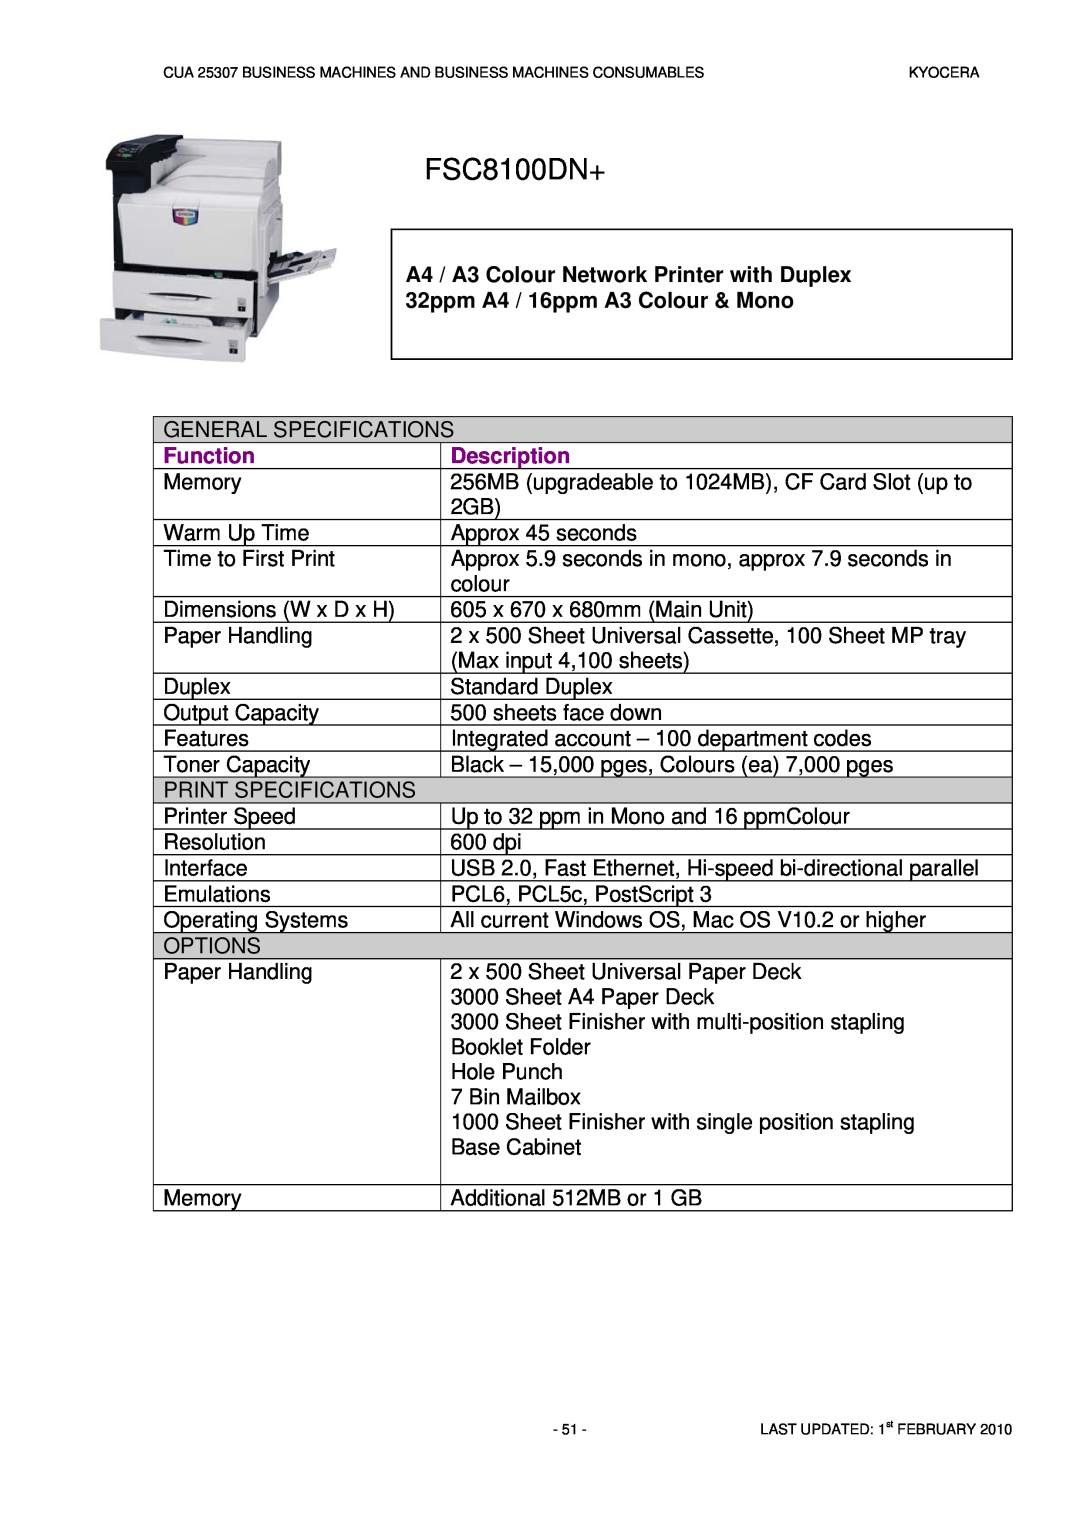 Kyocera CUA 25307 manual FSC8100DN+, Function, Description 